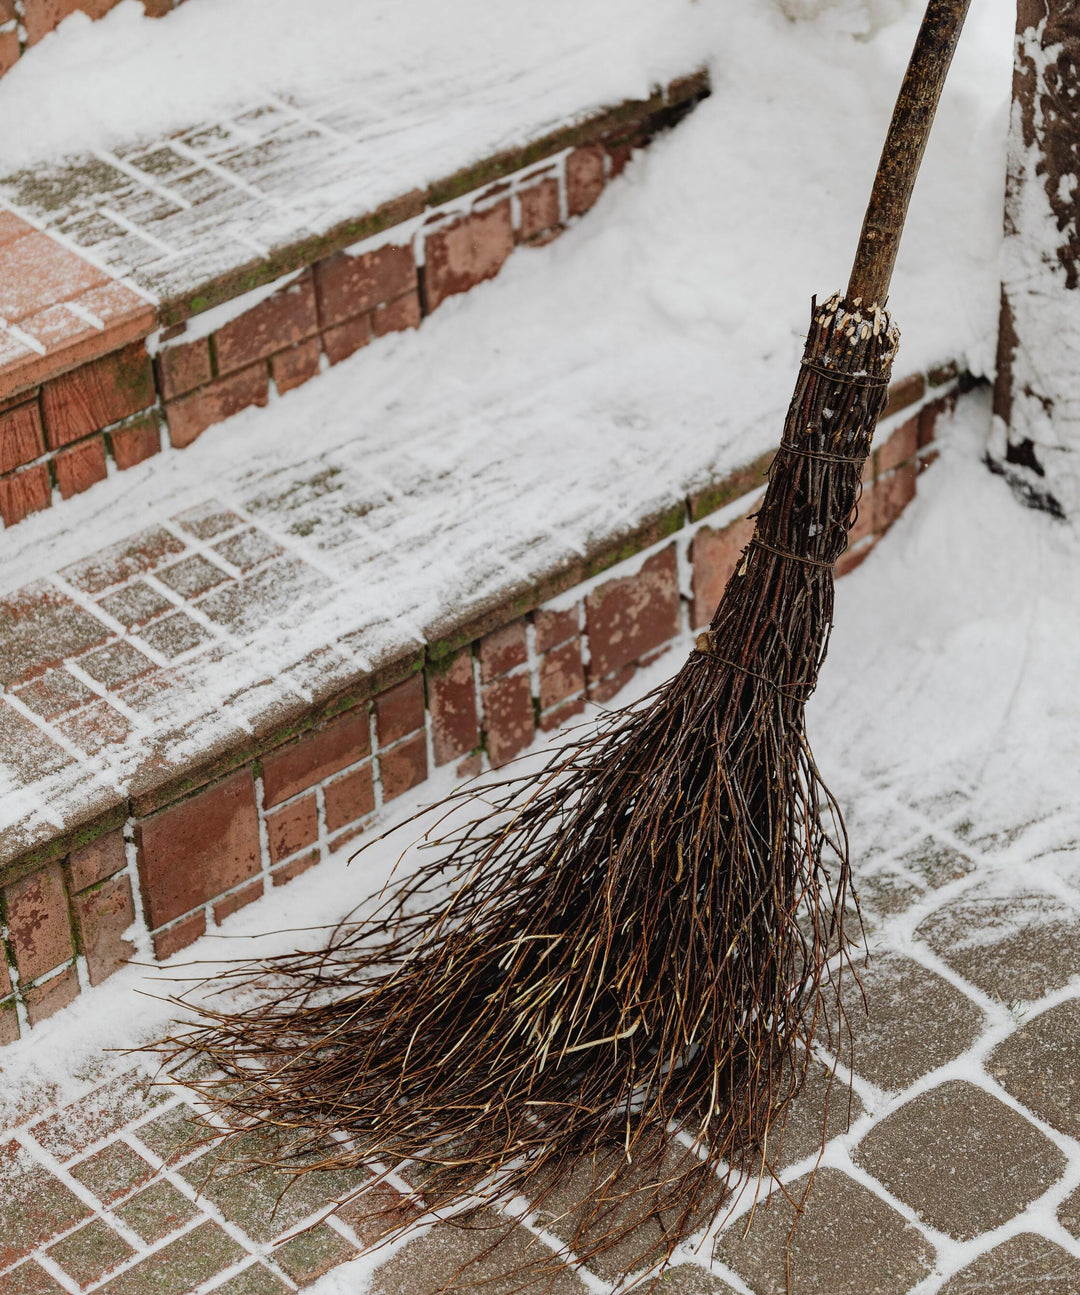 What is a cinnamon broom? A homemade cinnamon broom on a snowy walkway.